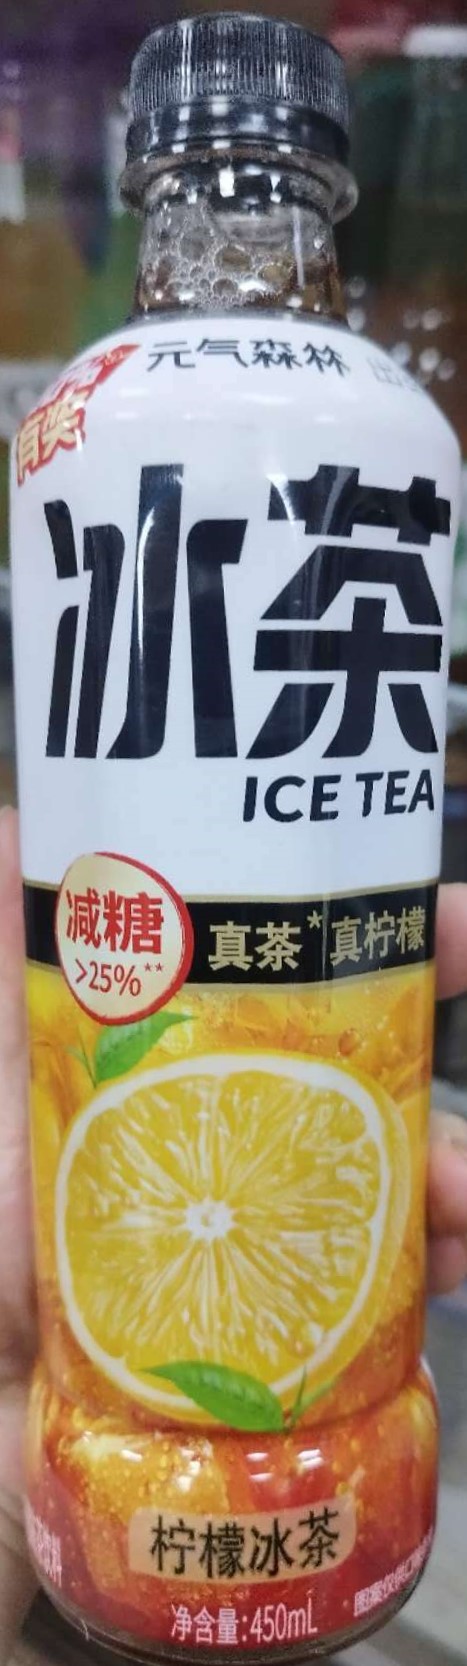 ice tea orange 450ml